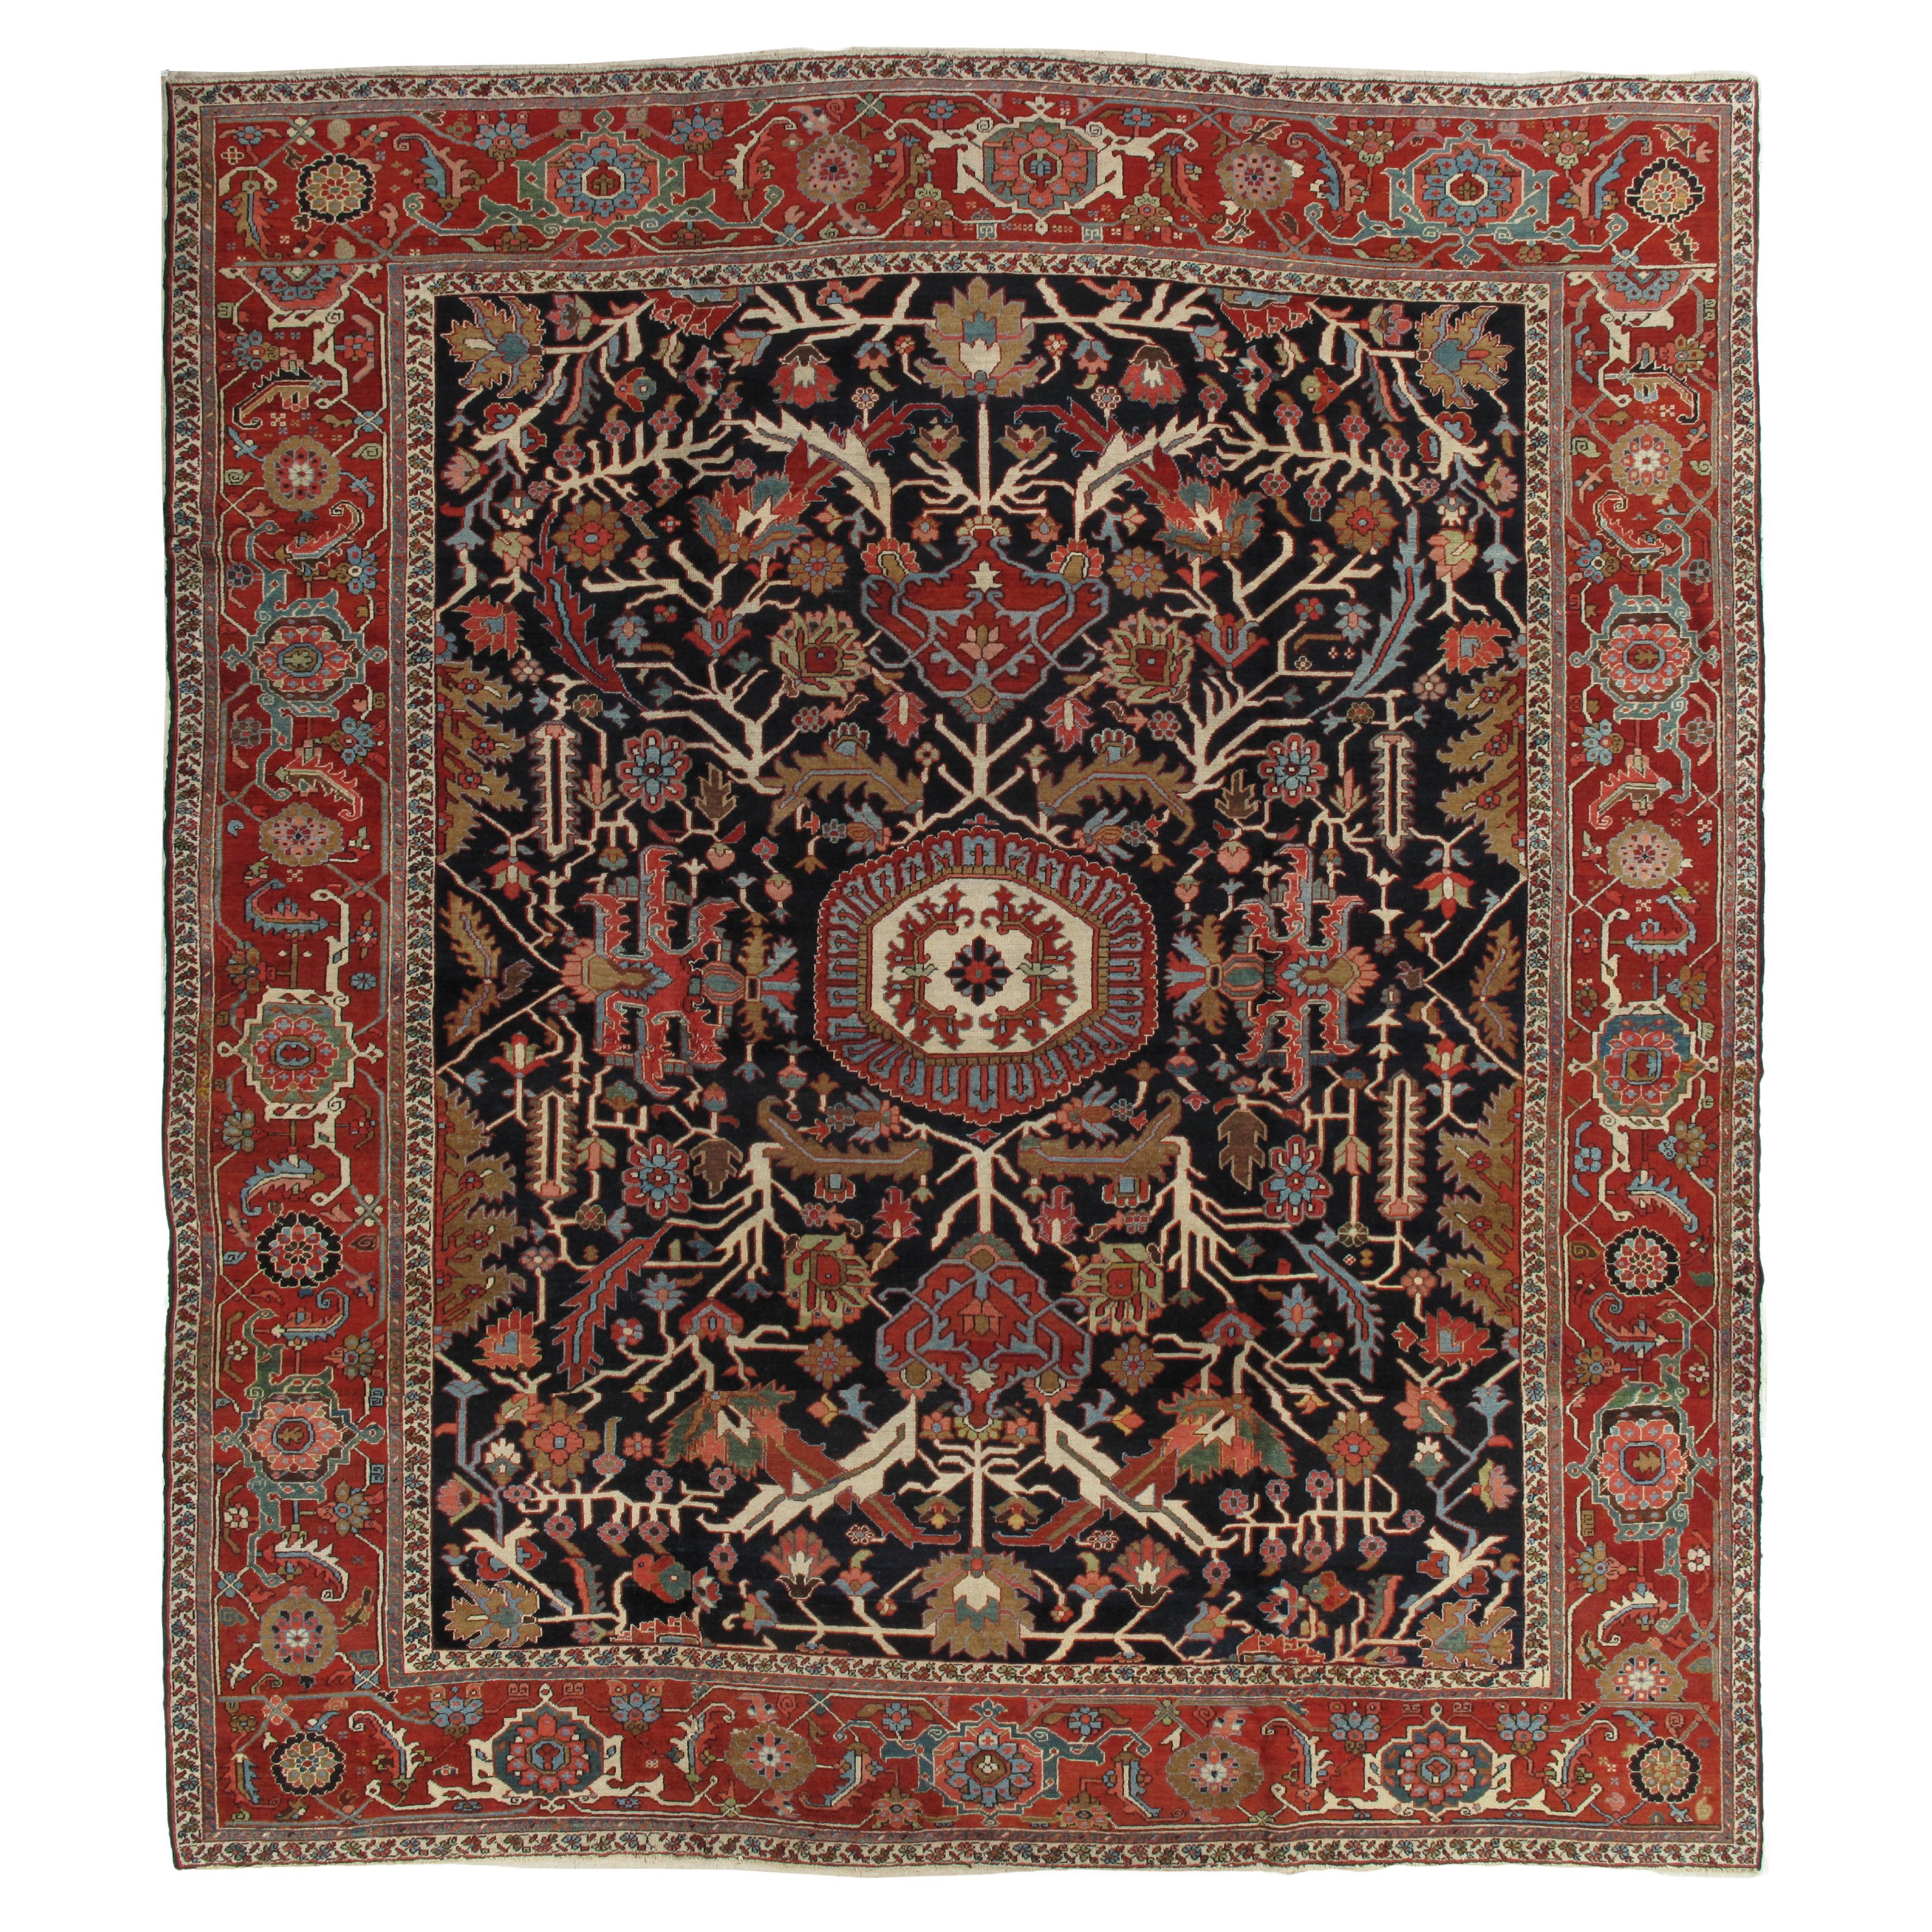 Antique Persian Heriz Carpet Handmade Wool Oriental Rug, Rust, Navy